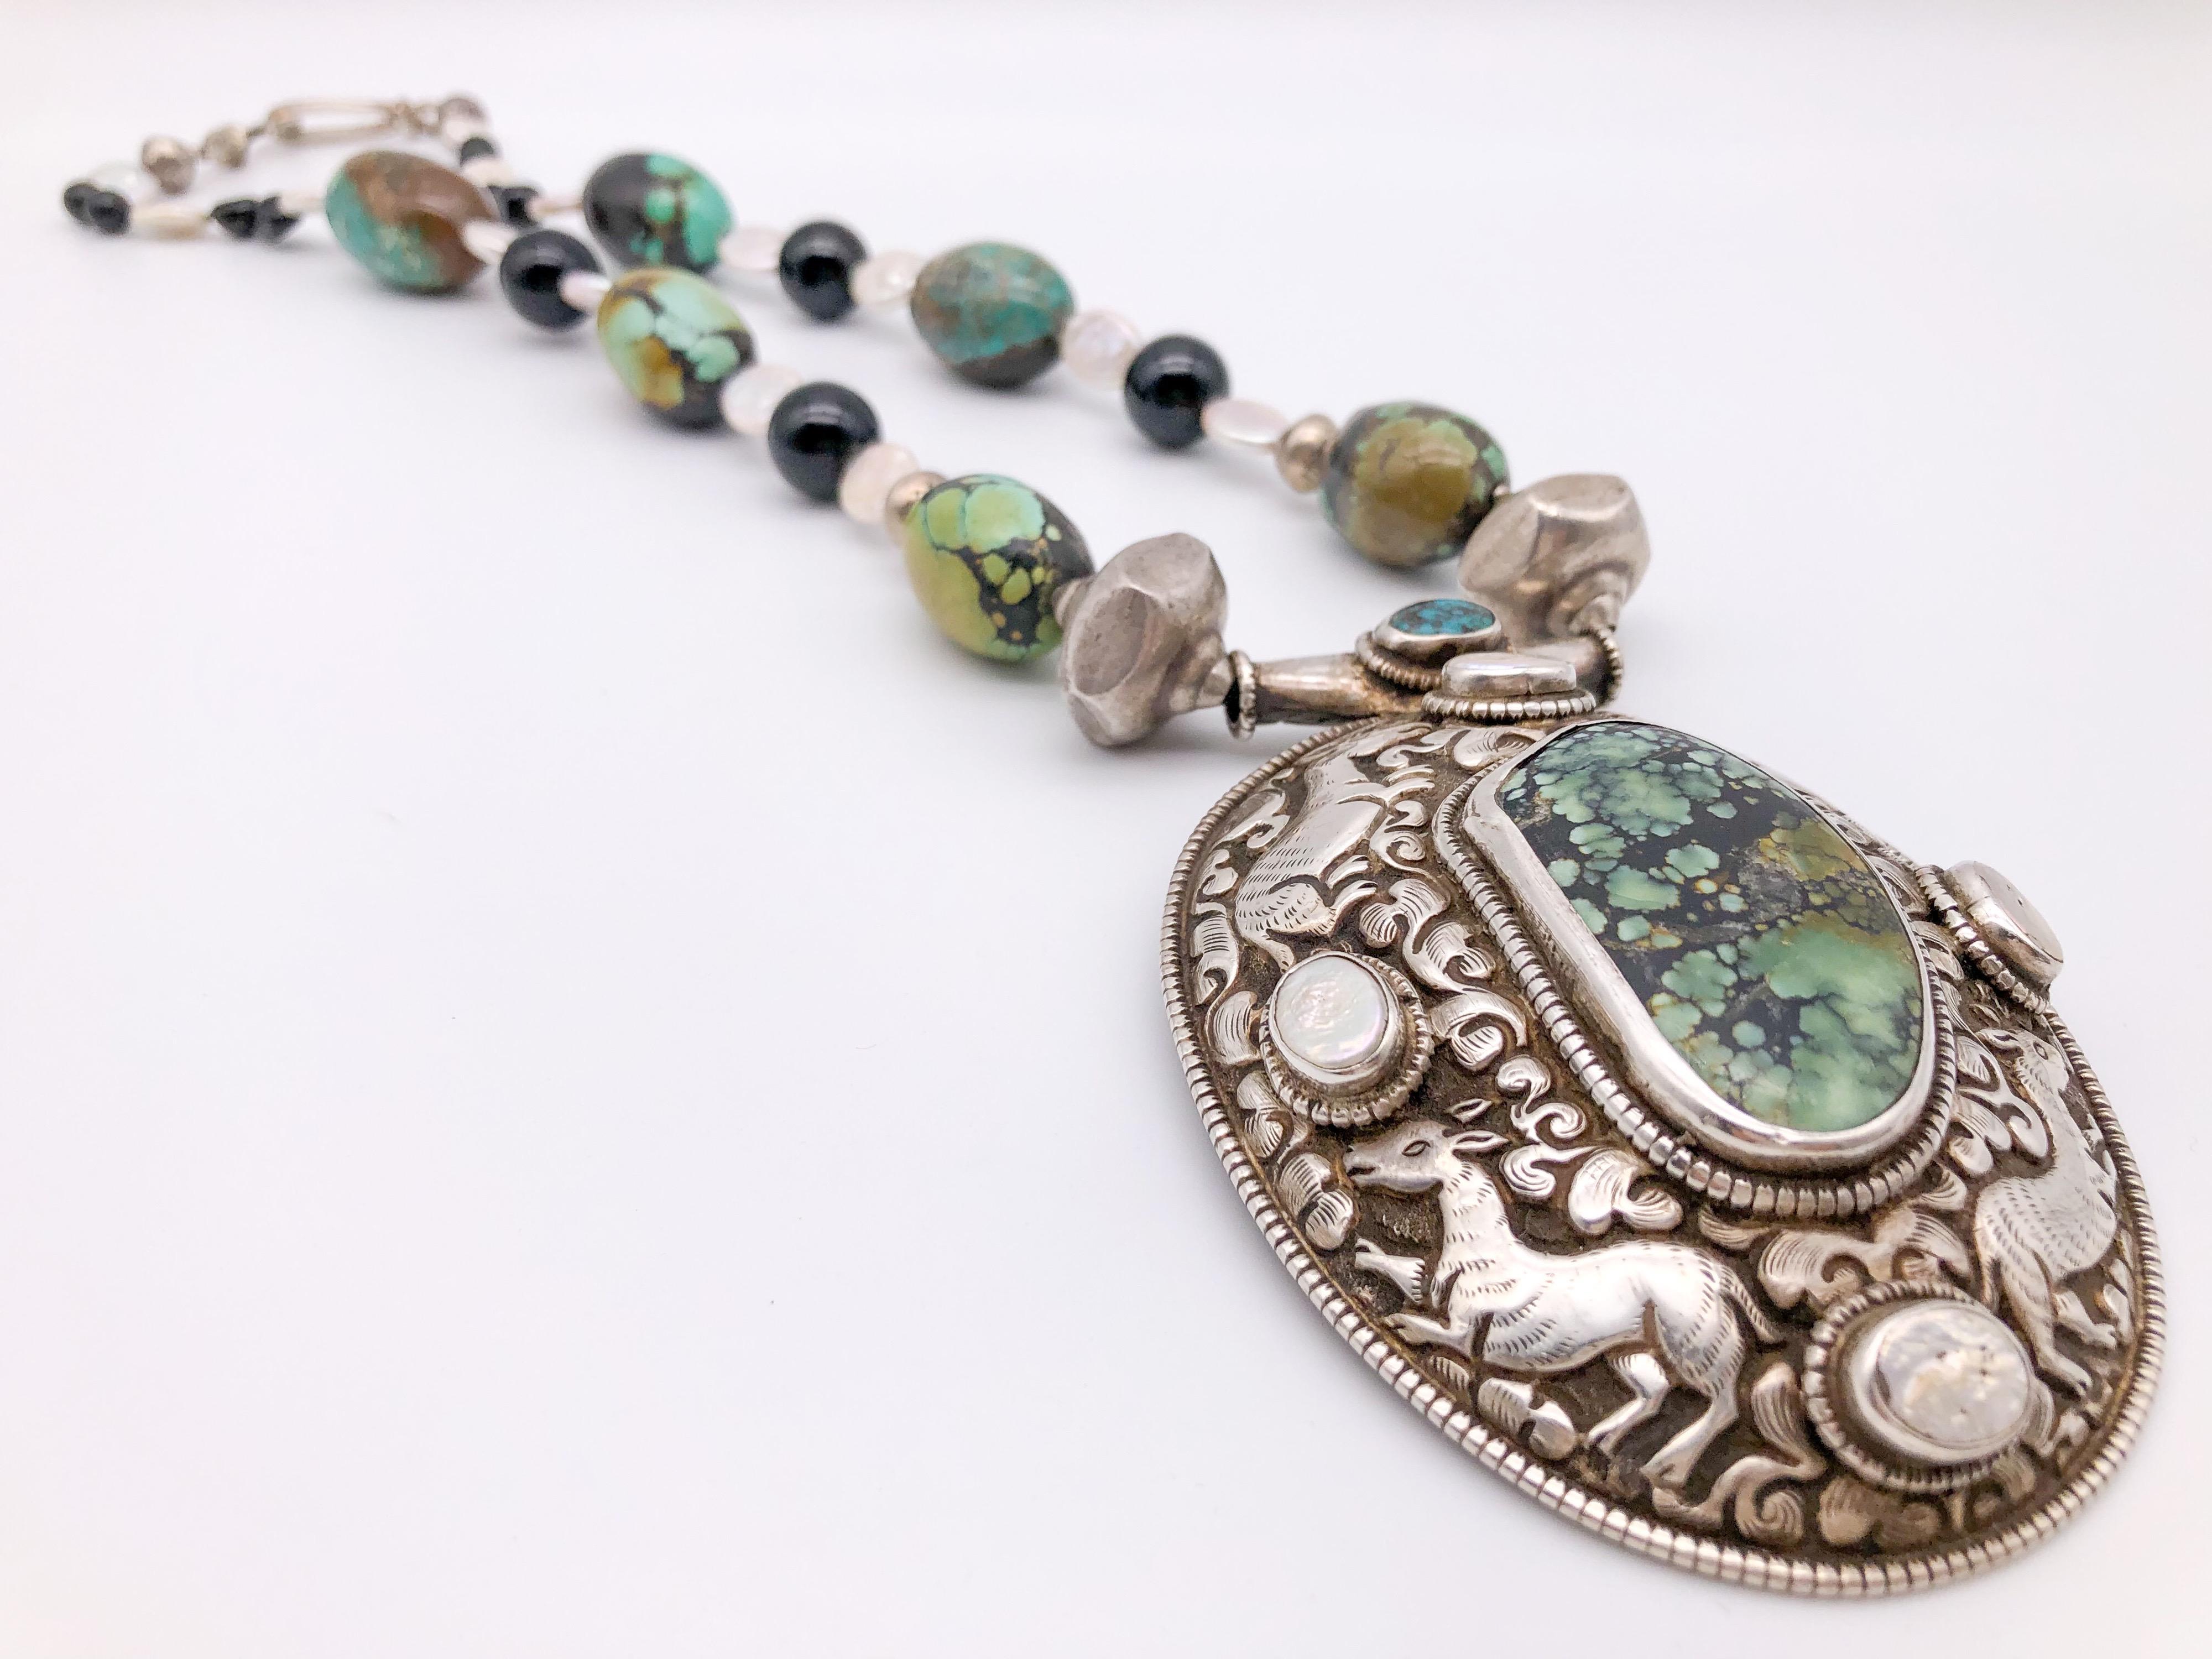 Mixed Cut A.Jeschel Marvelous Turquoise necklace with Tibetan Pendant For Sale